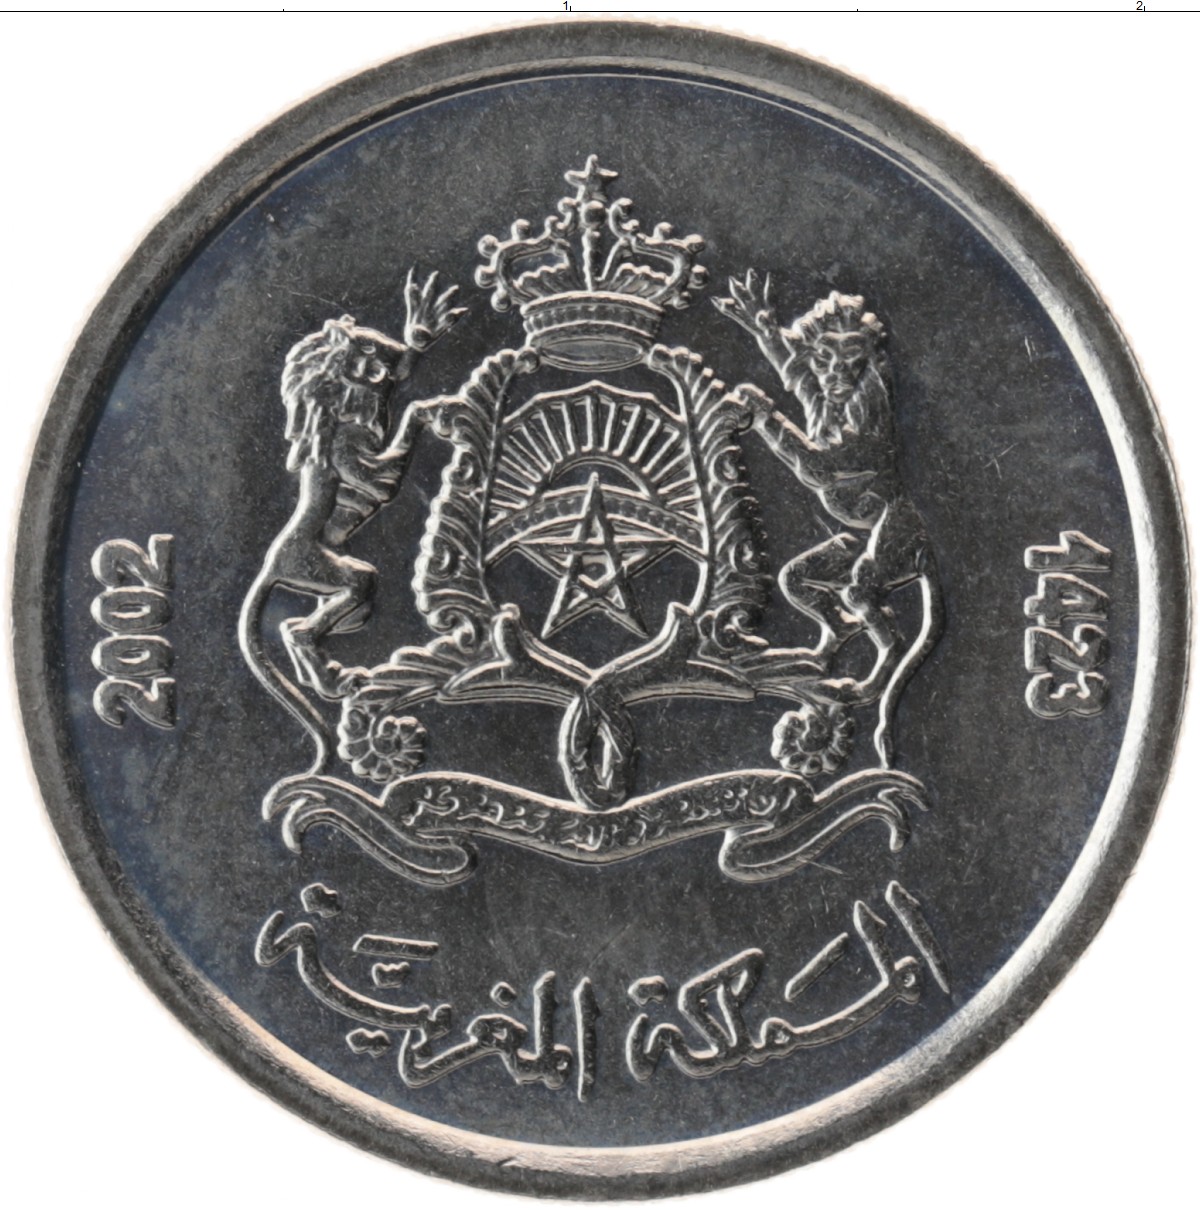 2 дирхама. 1/2 Дирхама 2002. Монета Марокко 1/2 дирхама 2002. 2 Дирхама монета. Дирхам ОАЭ.